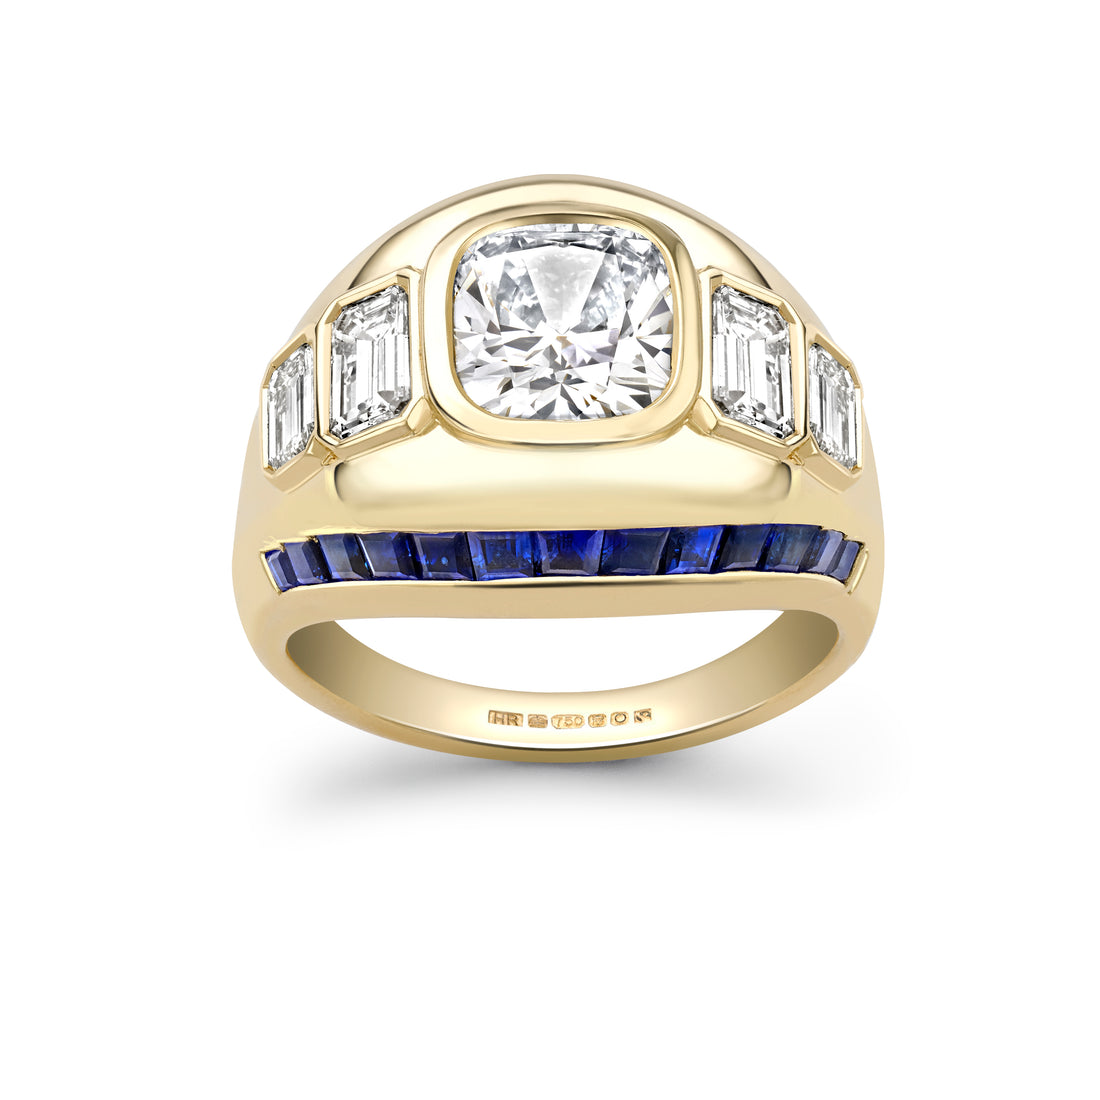  Bezel Set Diamond & Sapphire Ring by Hattie Rickards | The Cut London